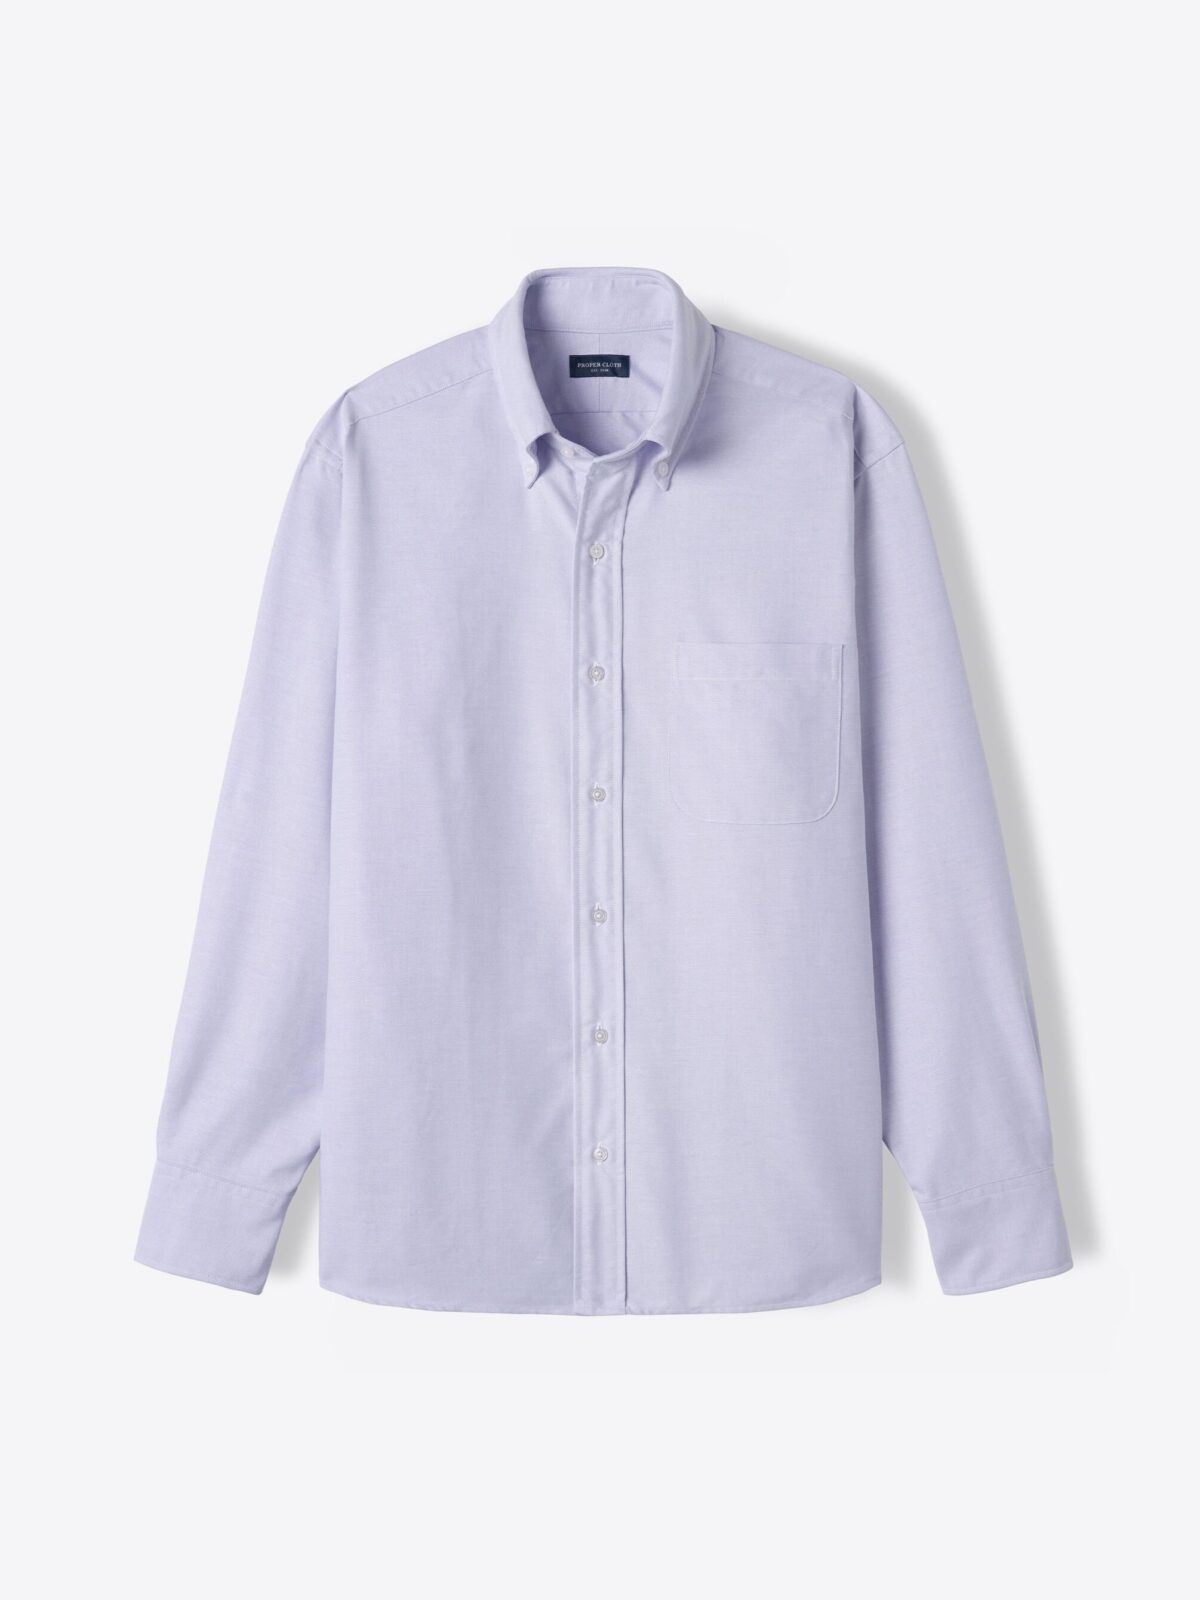 American Pima Lavender Oxford Cloth Shirt by Proper Cloth